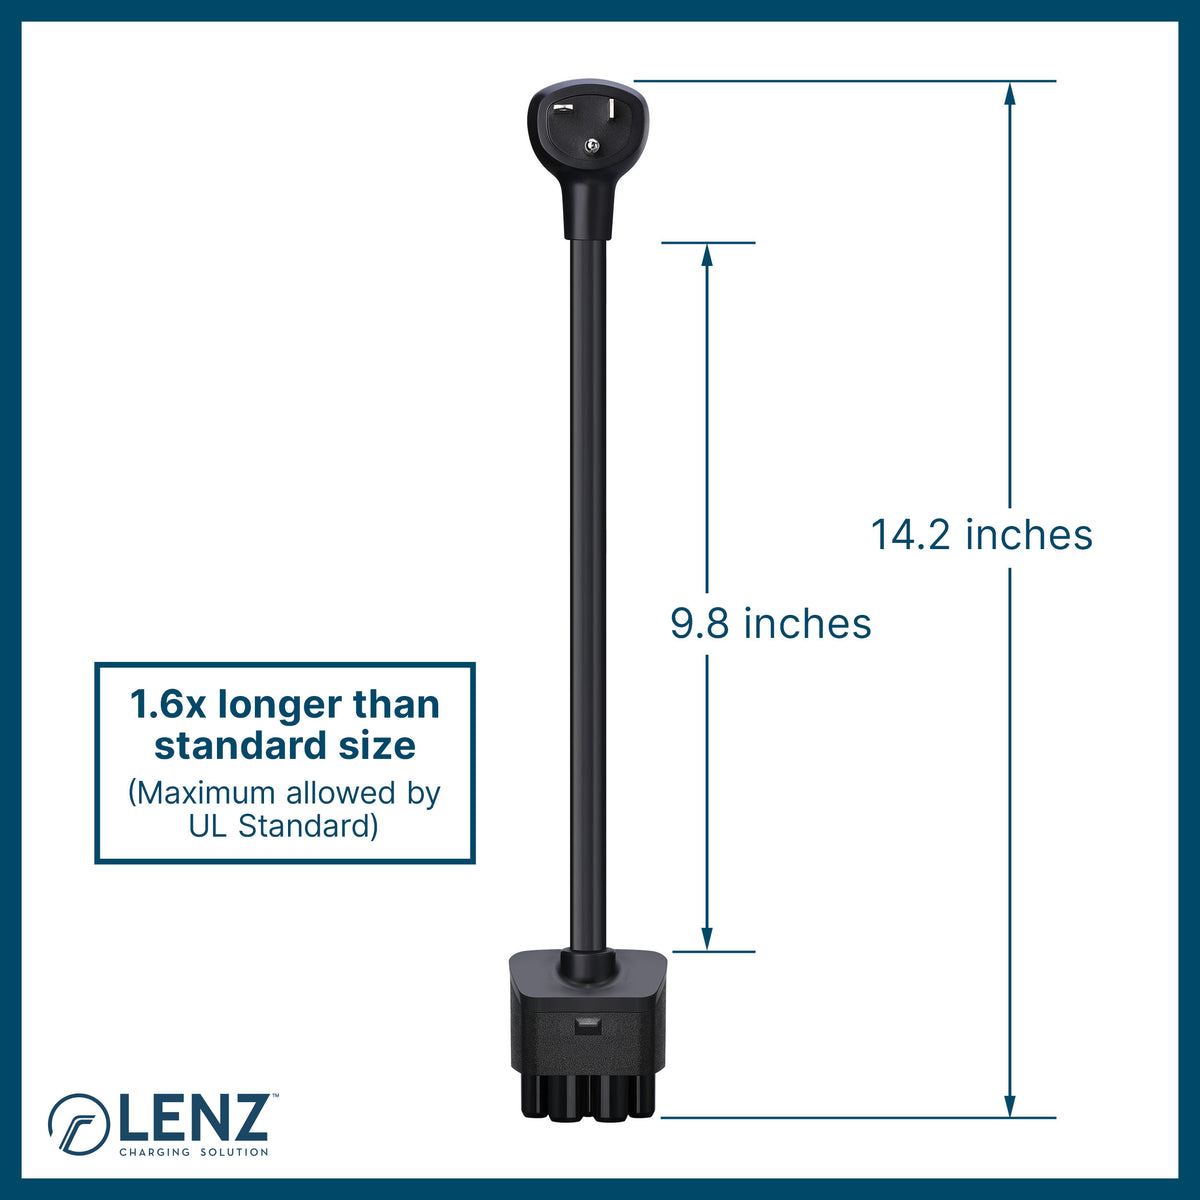 LENZ NEMA 6-20 Adapter for Tesla Gen 2 Mobile Connector Measures 14.2 inches